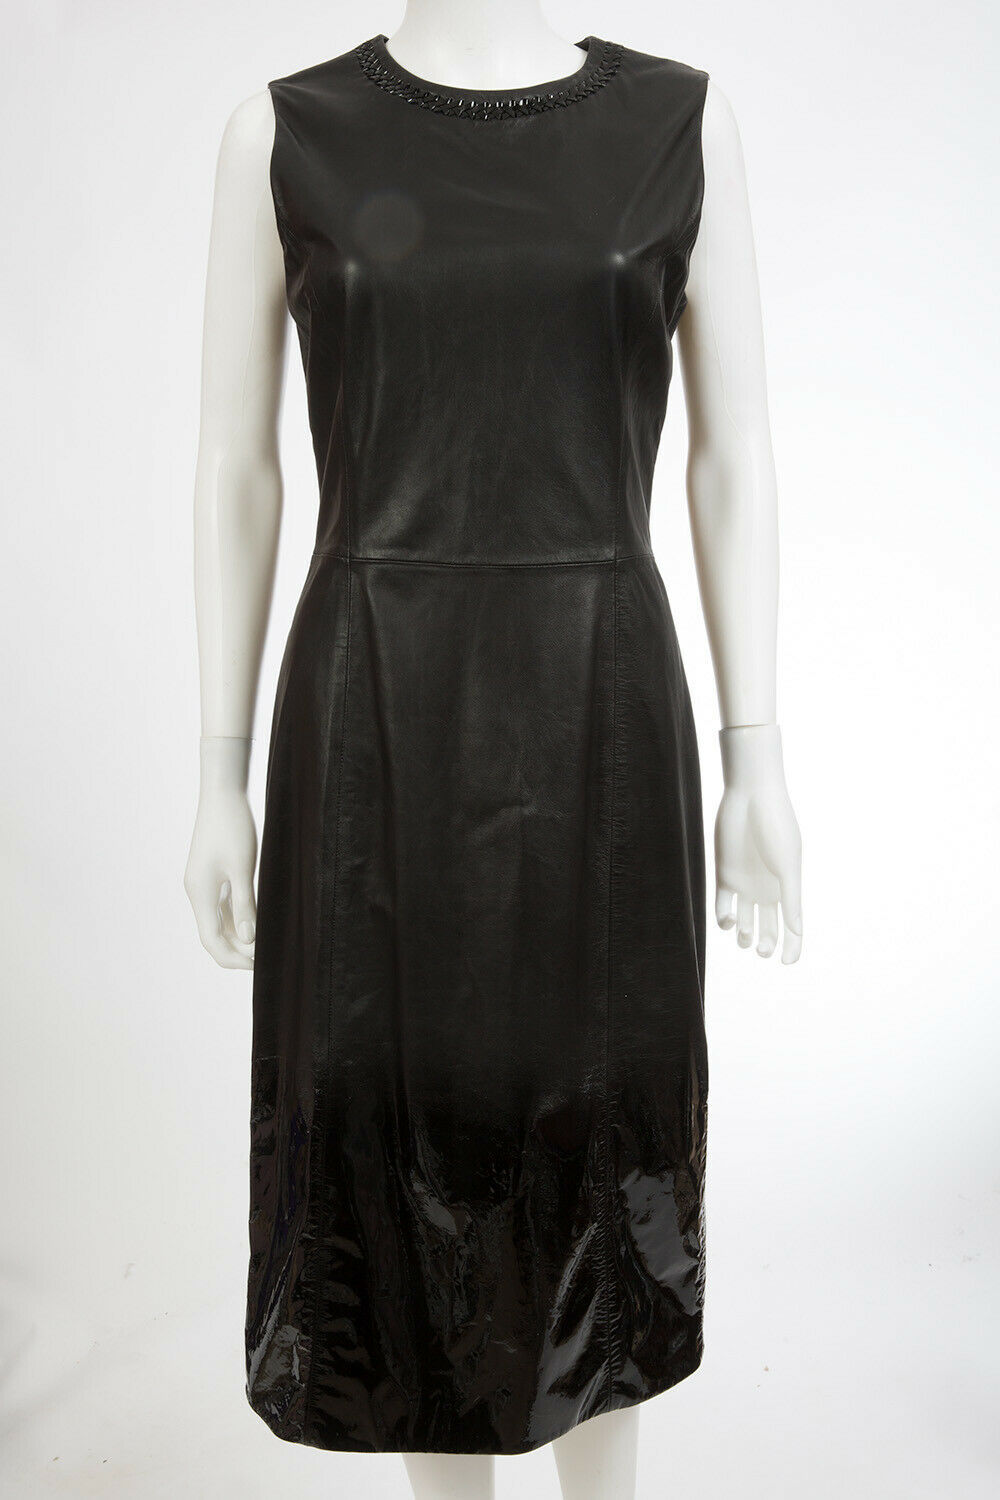 Primary image for Bottega Veneta Black Leather Sheath Dress sz 42 US 6 $2985